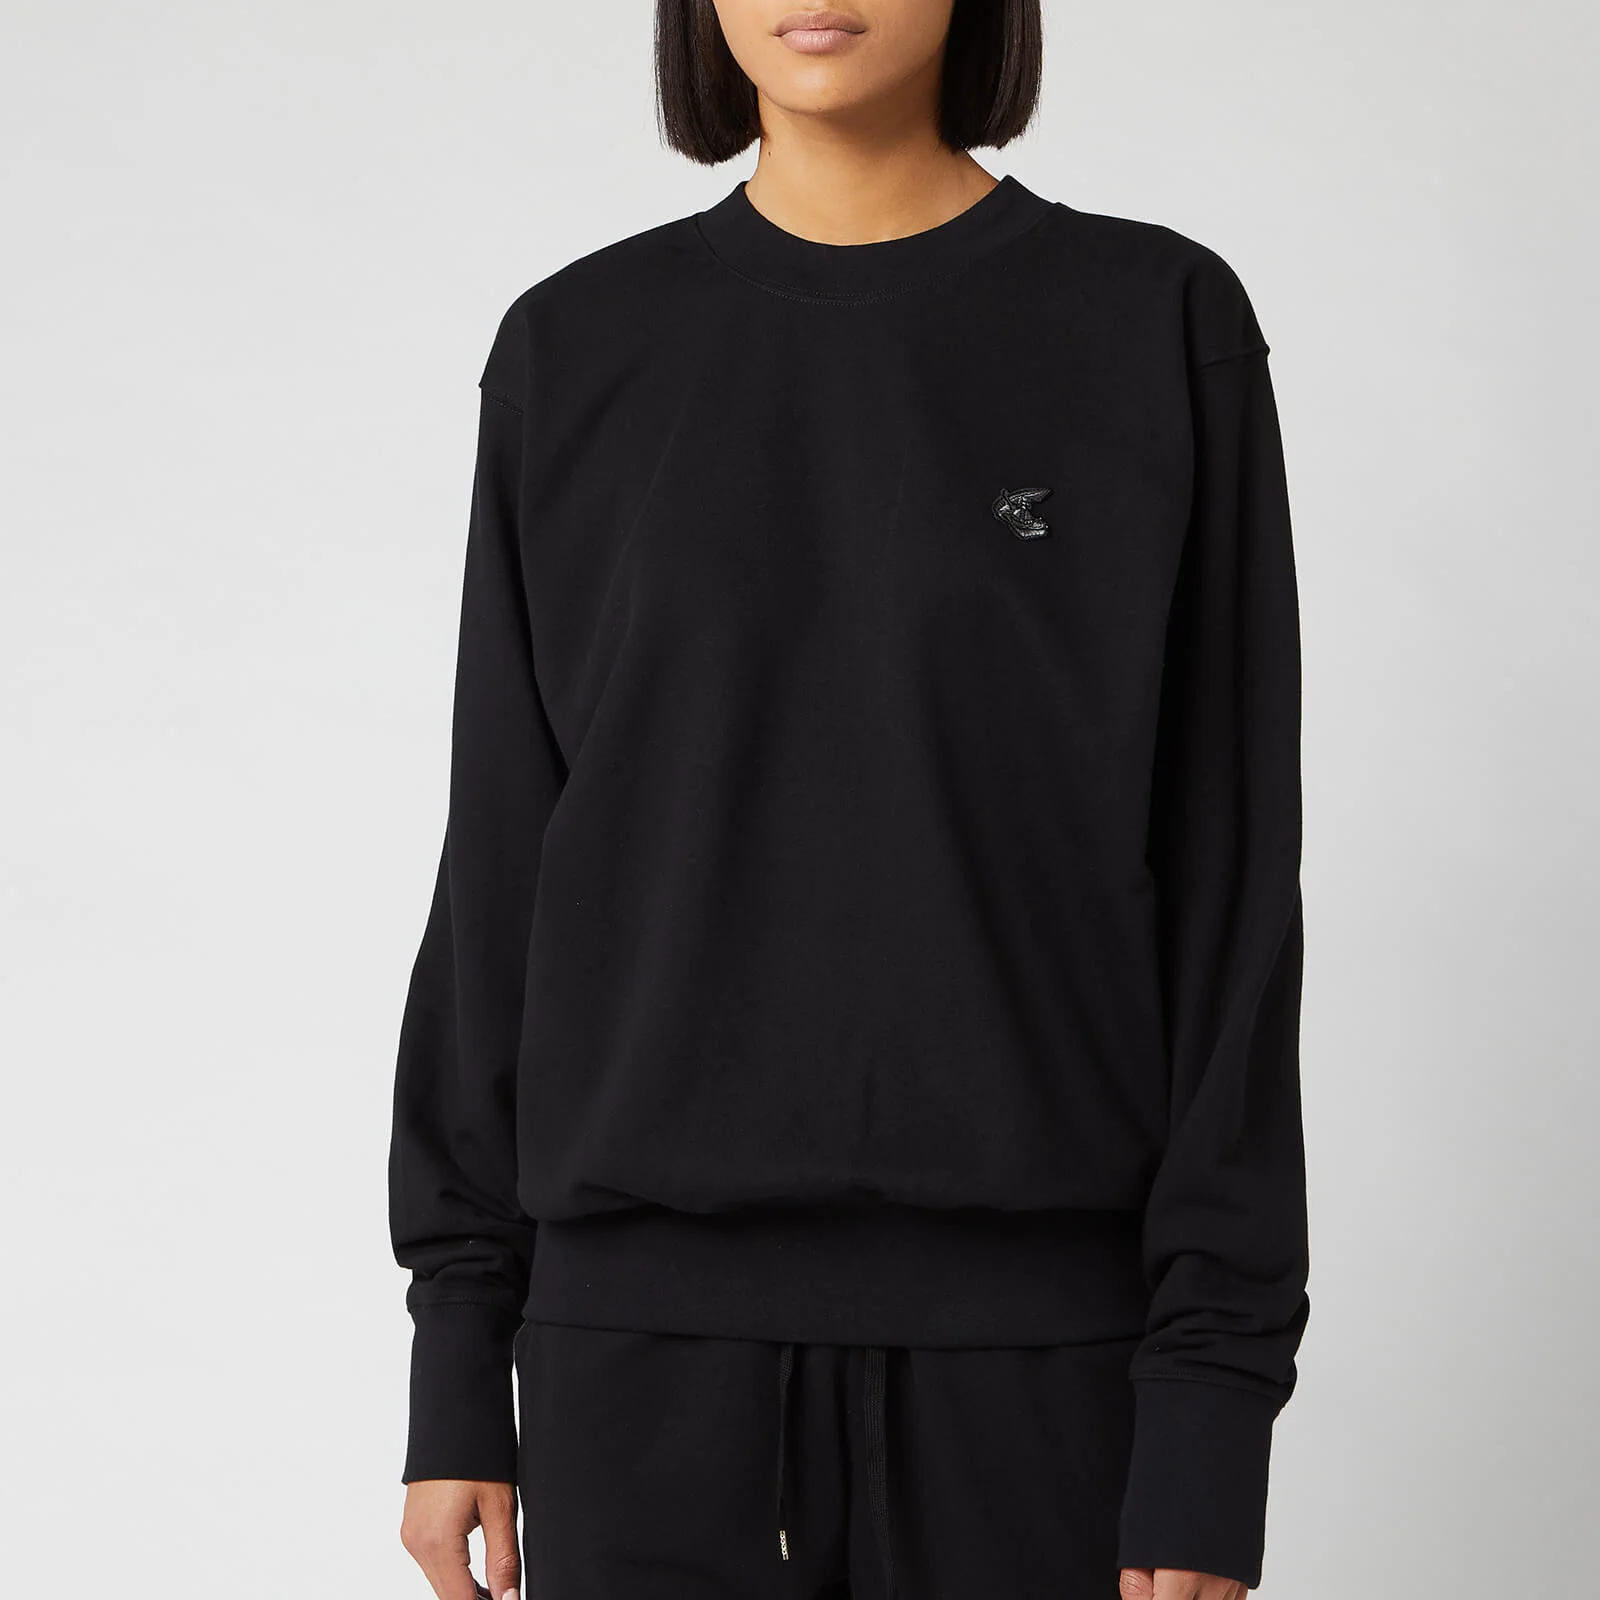 Vivienne Westwood Anglomania Women's Classic Sweatshirt - Black Image 1